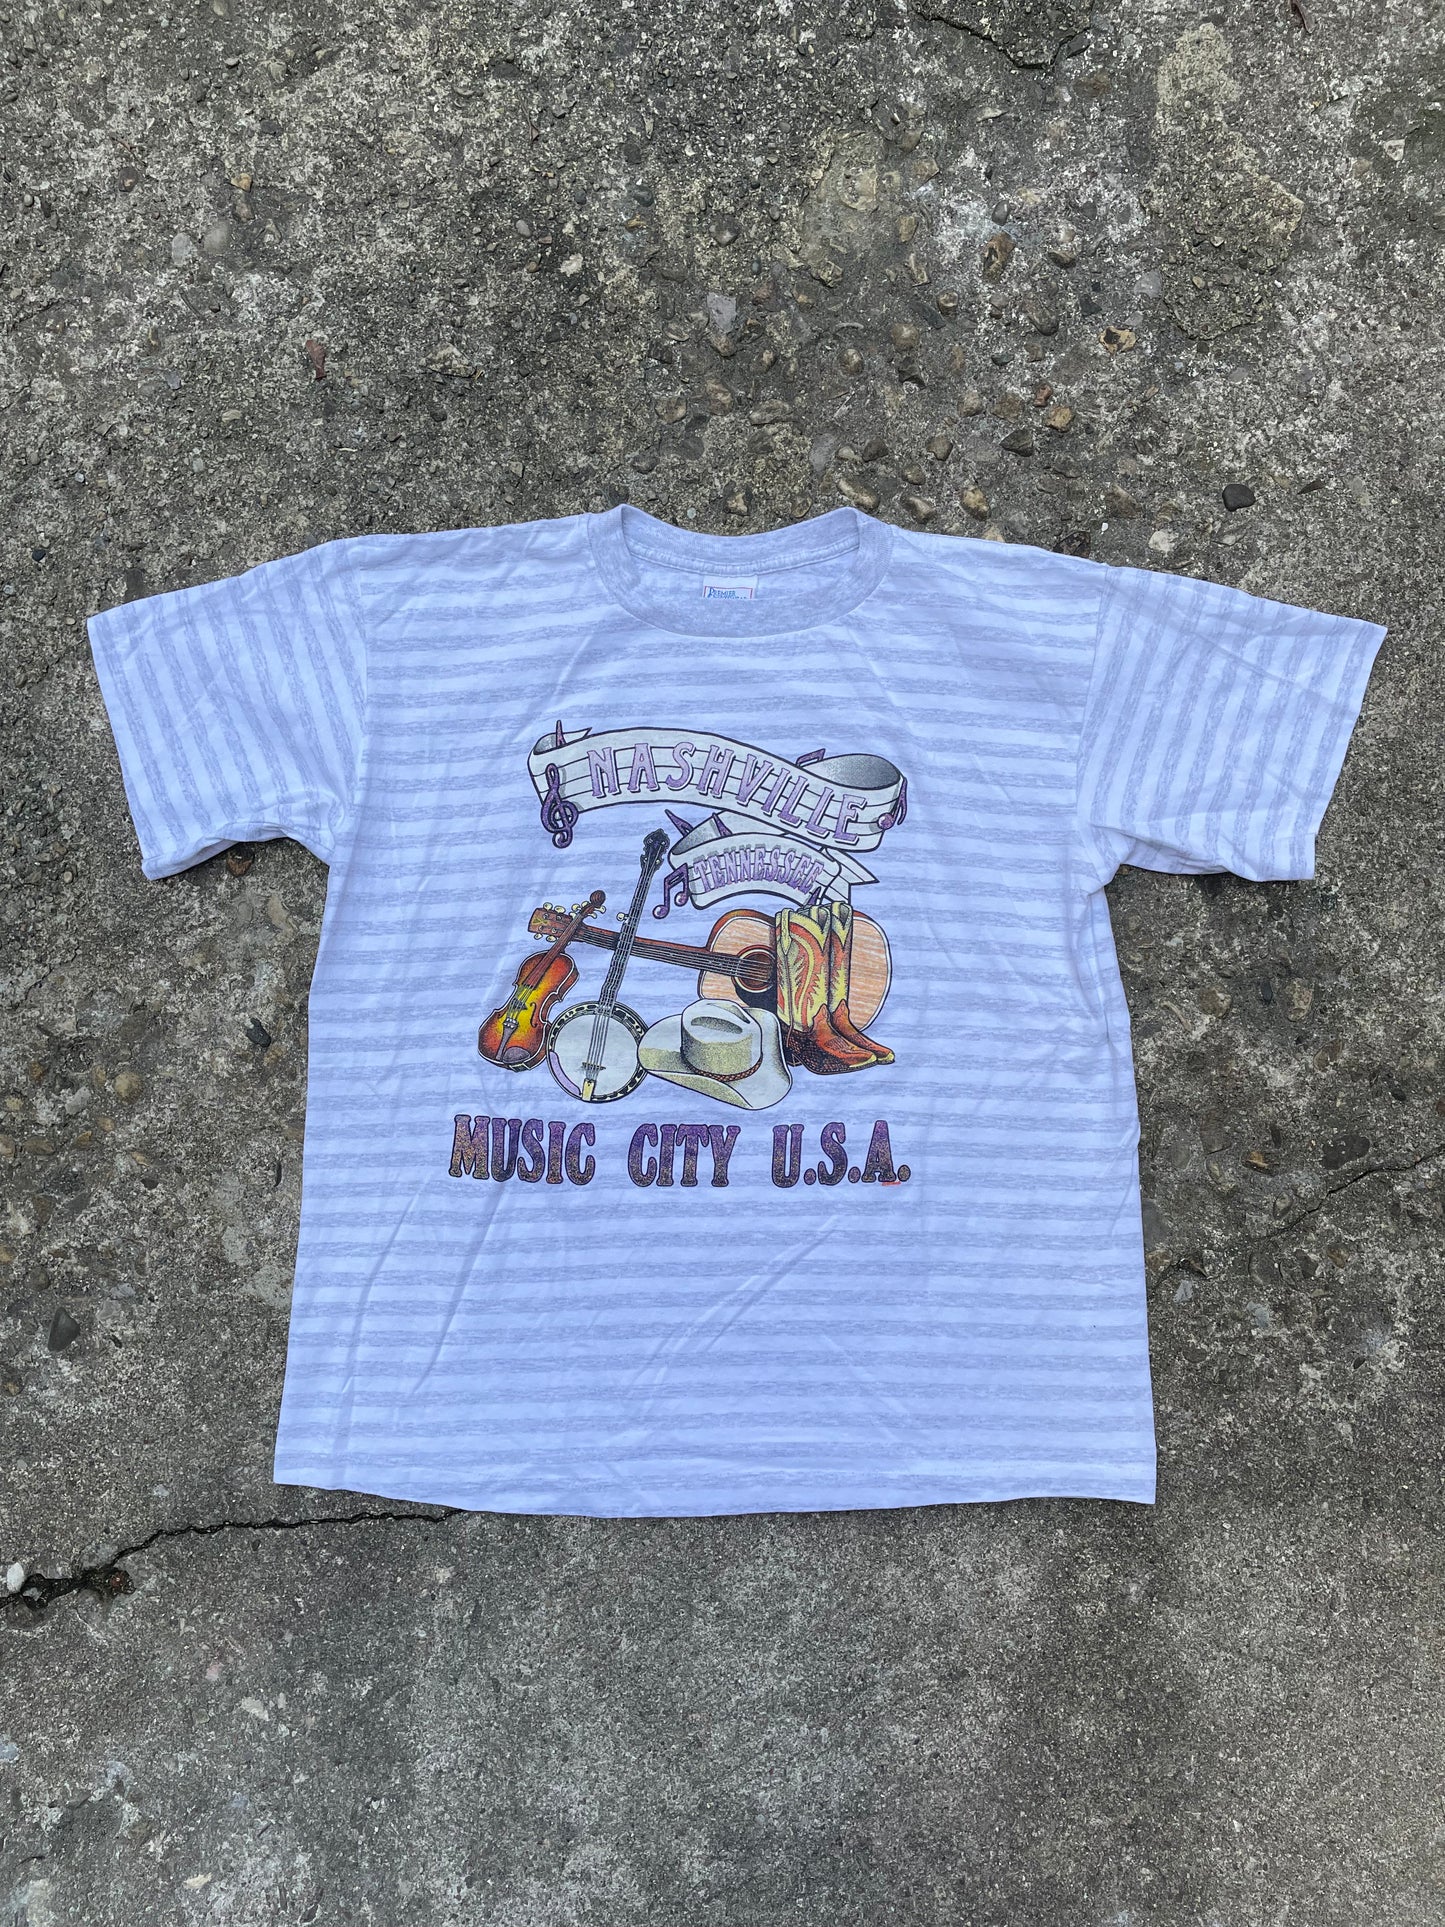 1990’s Nashville Tennessee Graphic T-Shirt - XL